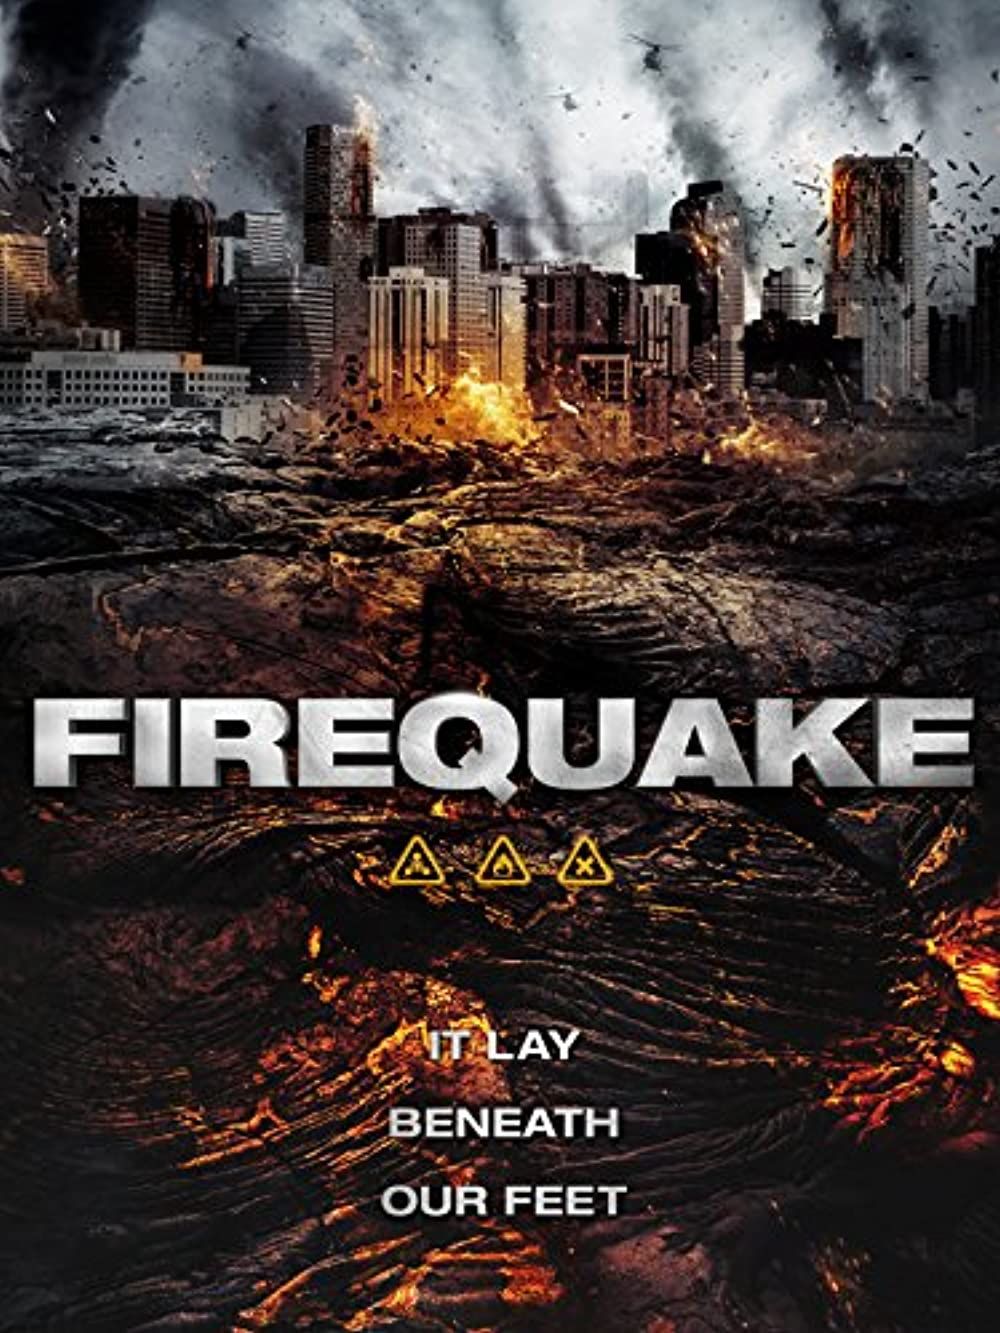 Firequake (2014) Hindi Dubbed BluRay Full Movie